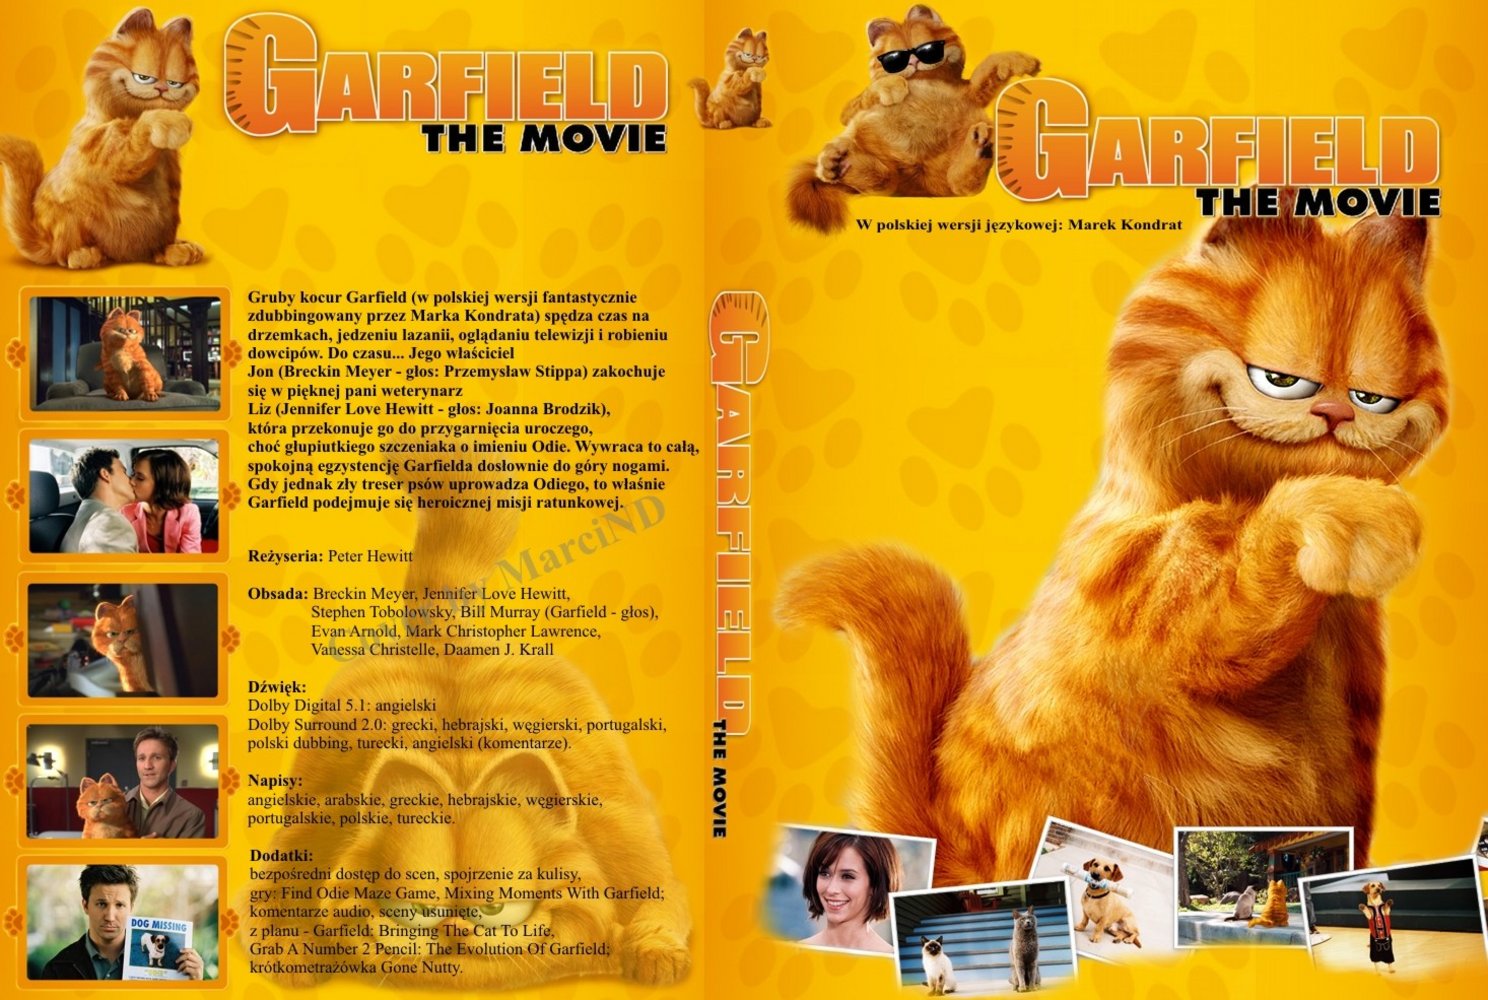 Гарфилд 1 на русском языке. Гарфилд 2 DVD. Обложка Гарфилд 2004.